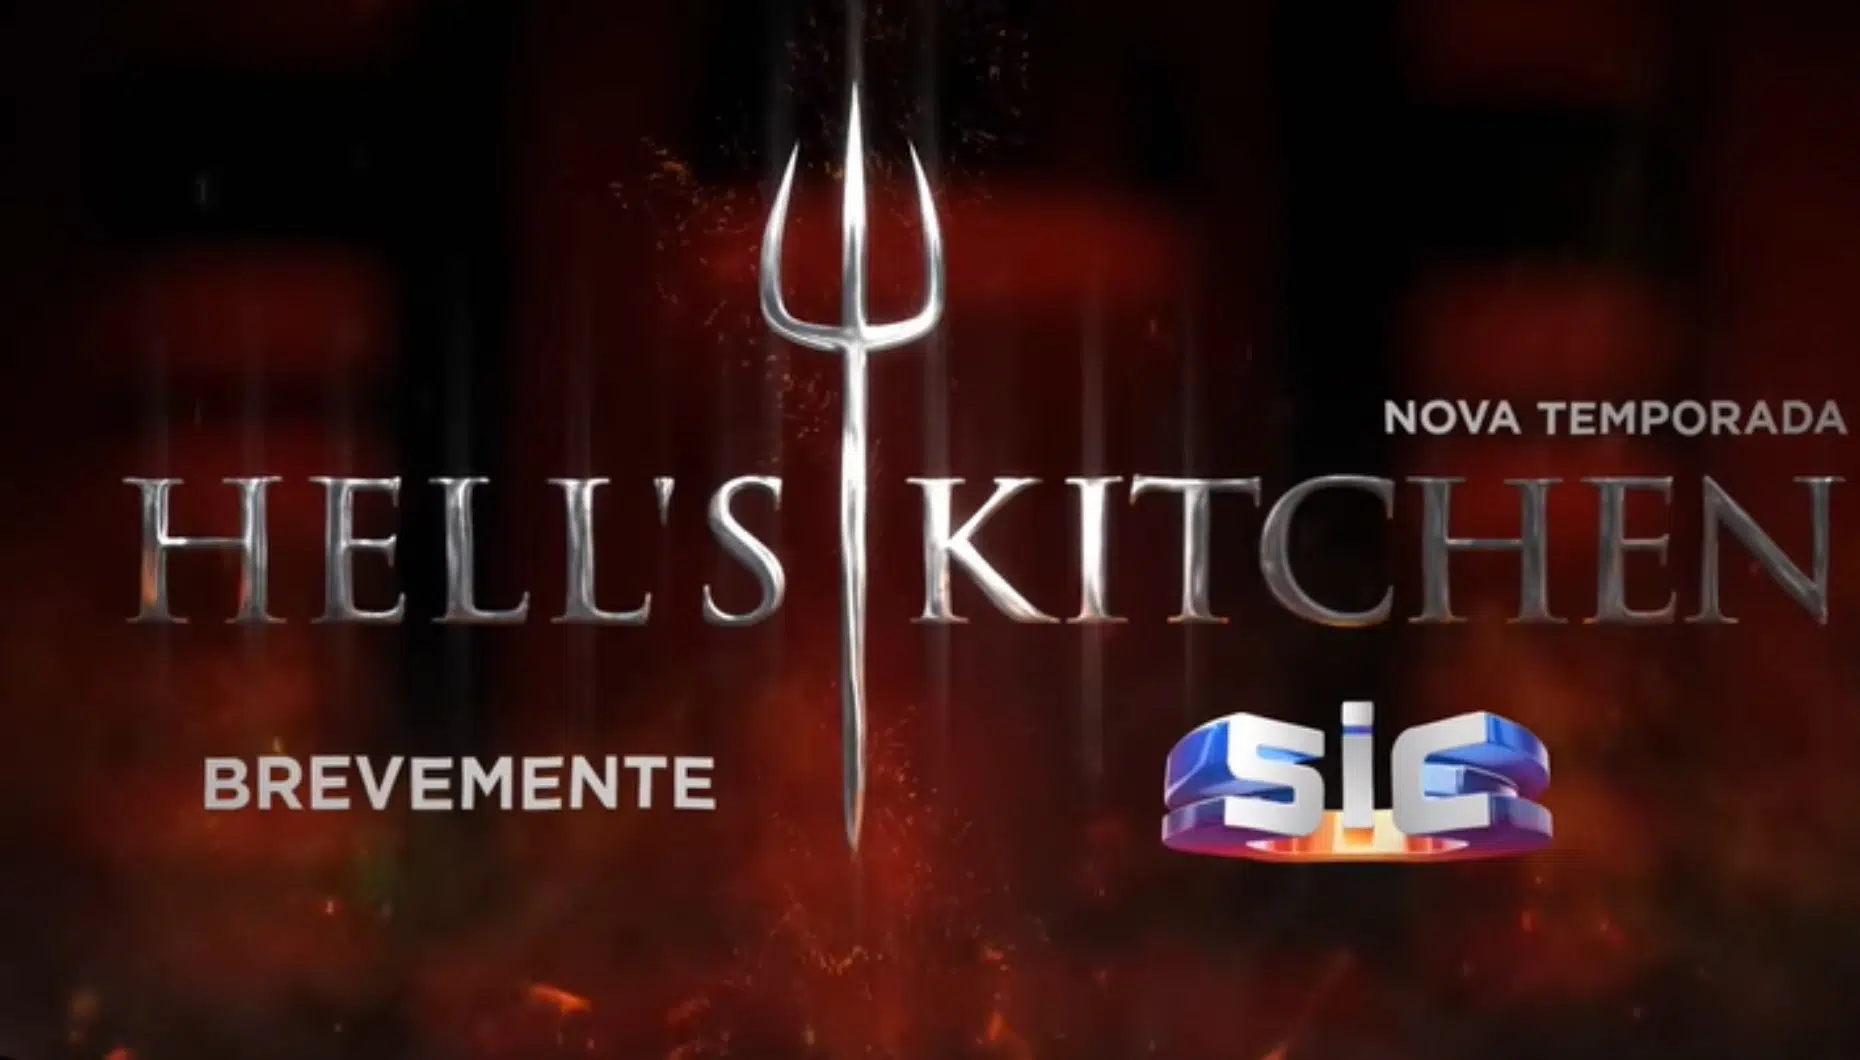 Hell'S Kitchen, Sic